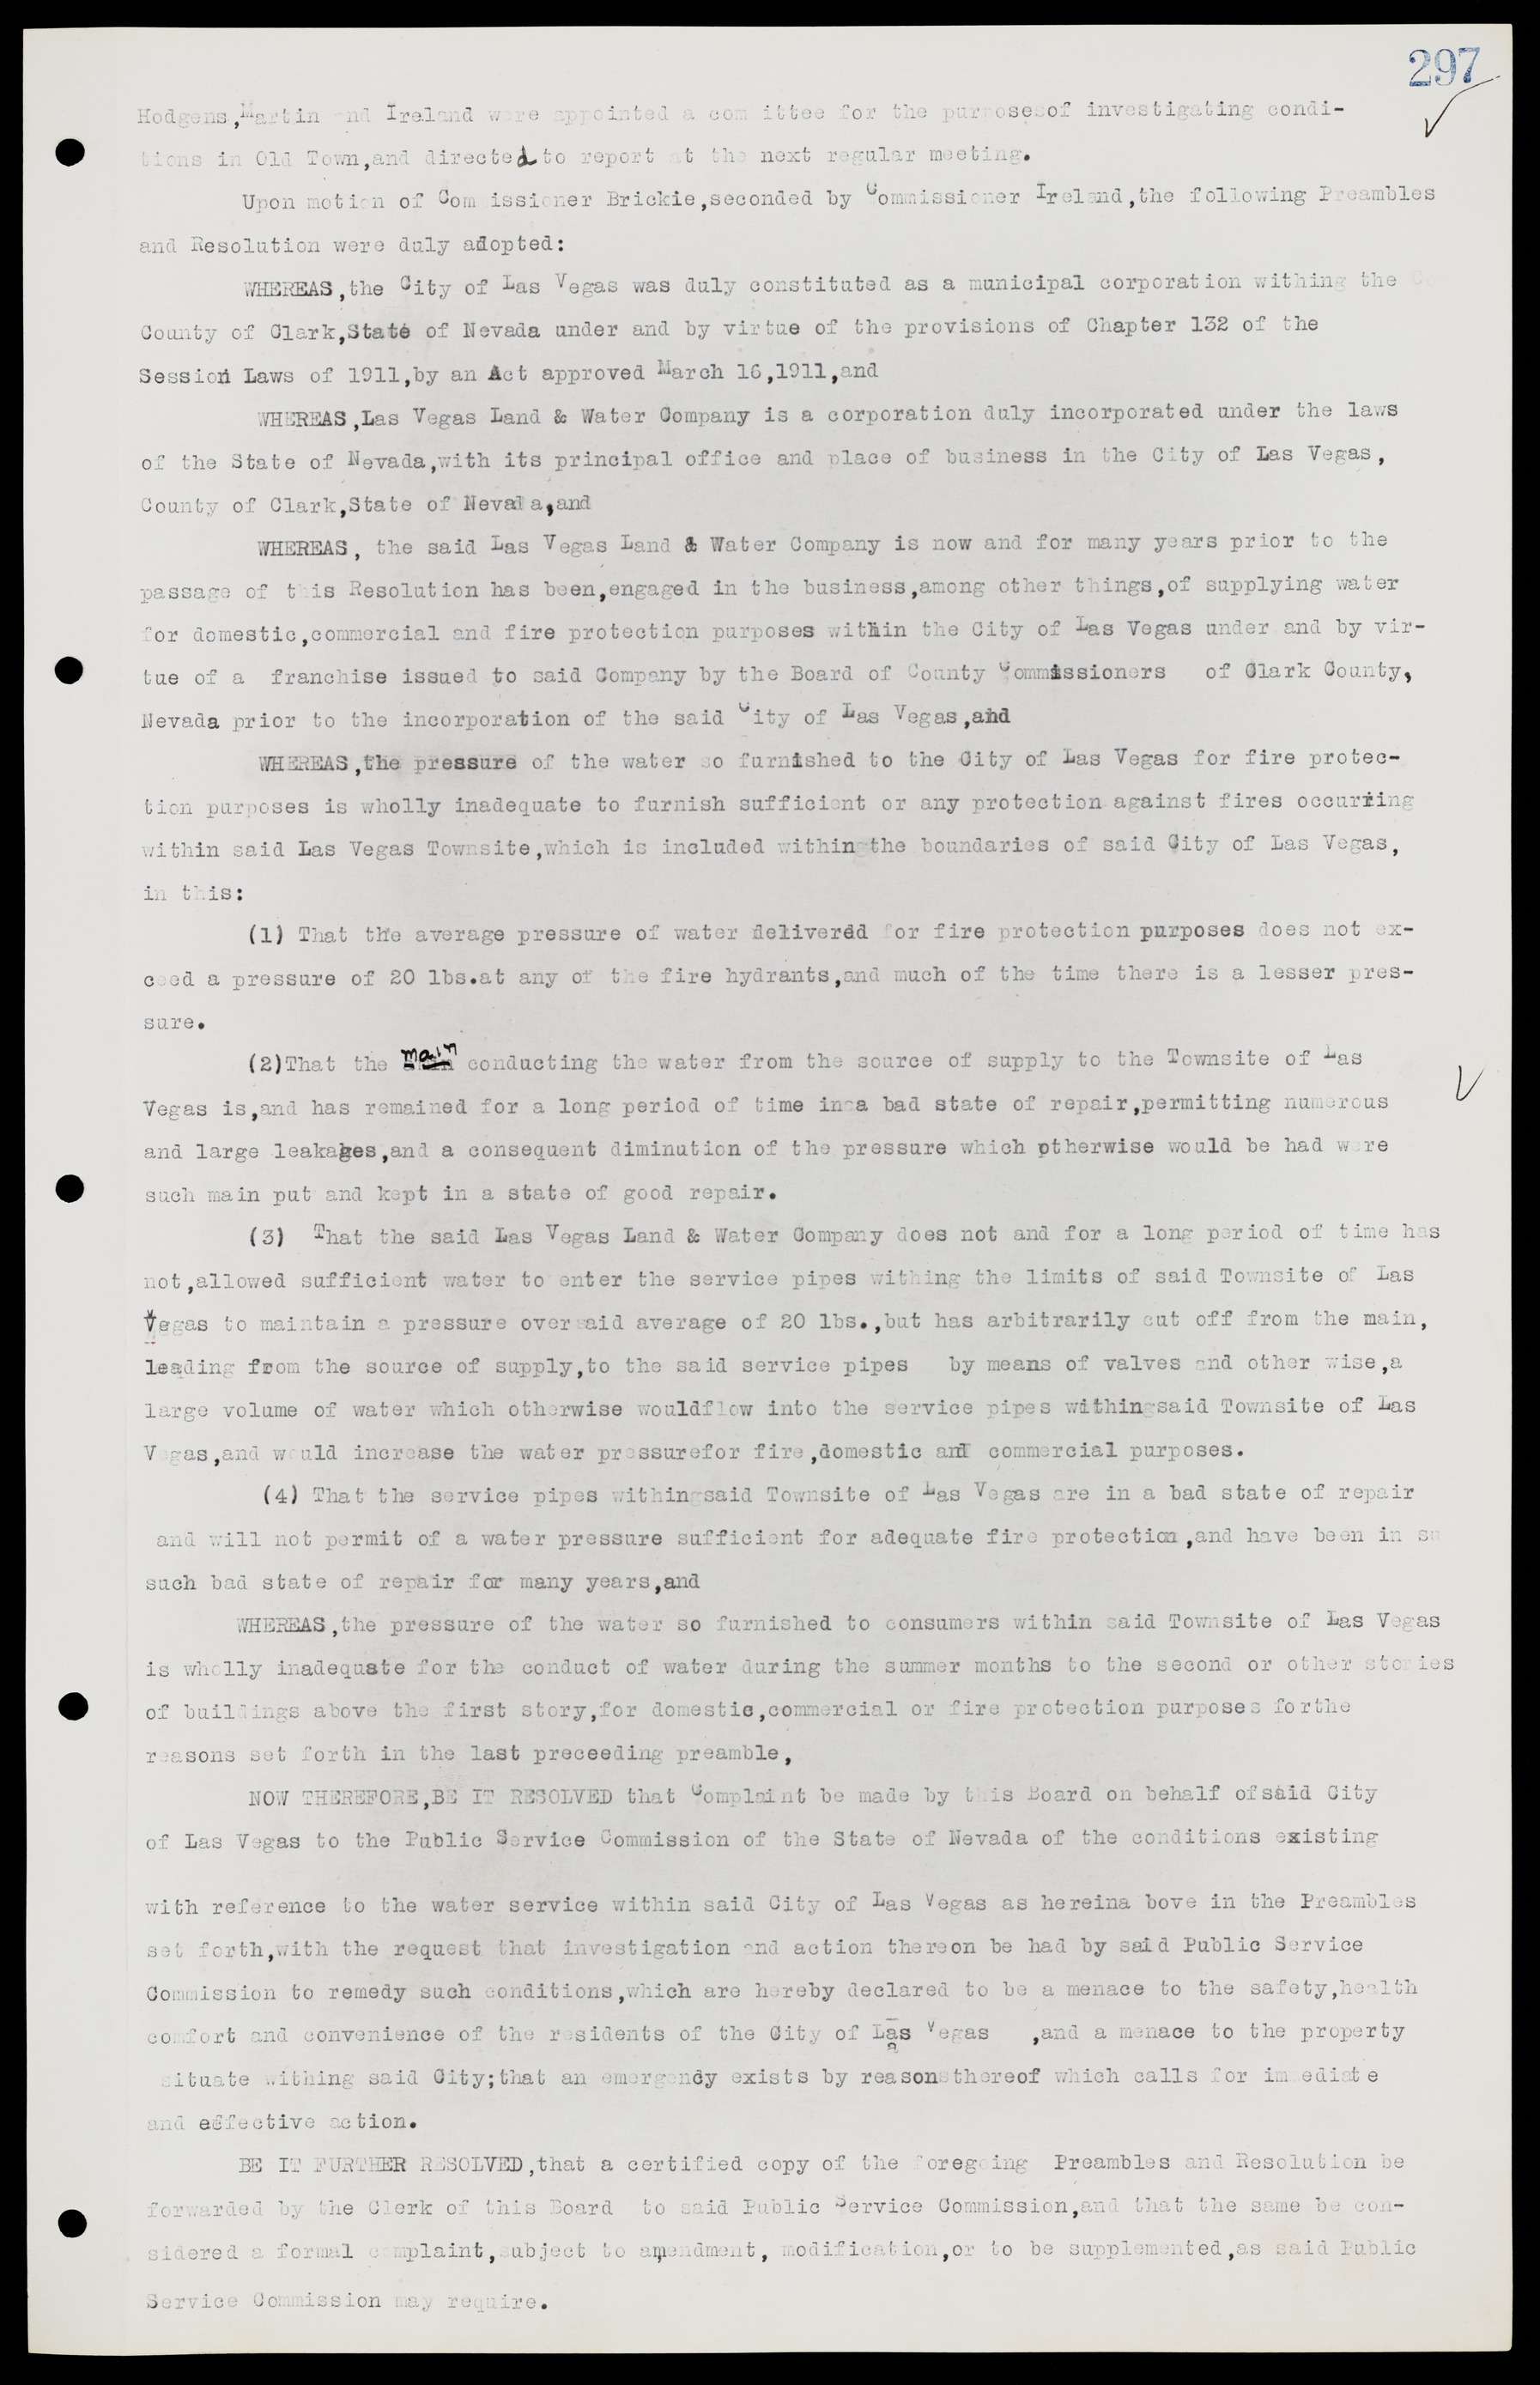 Las Vegas City Commission Minutes, June 22, 1911 to February 7, 1922, lvc000001-313